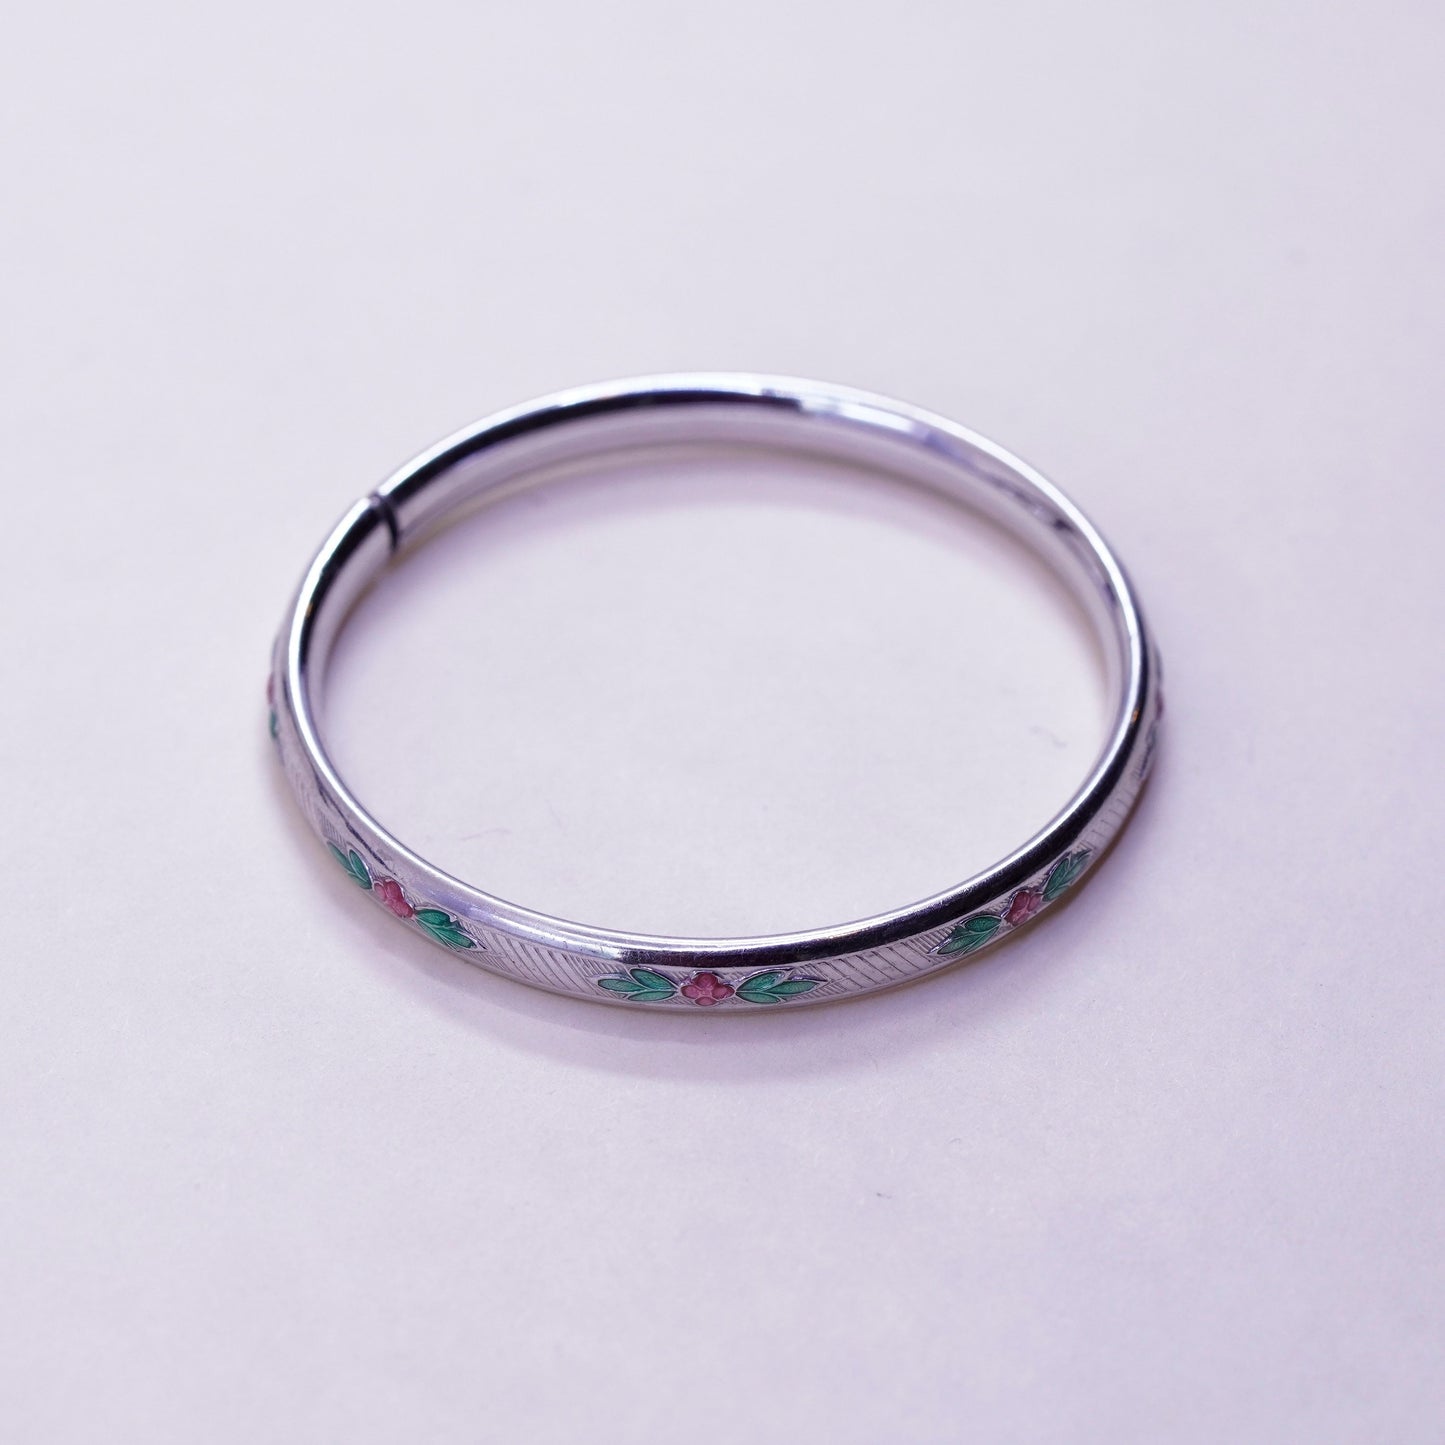 Size 5.25”, Sterling silver baby bracelet, Mexico 925 bangle enamel flower